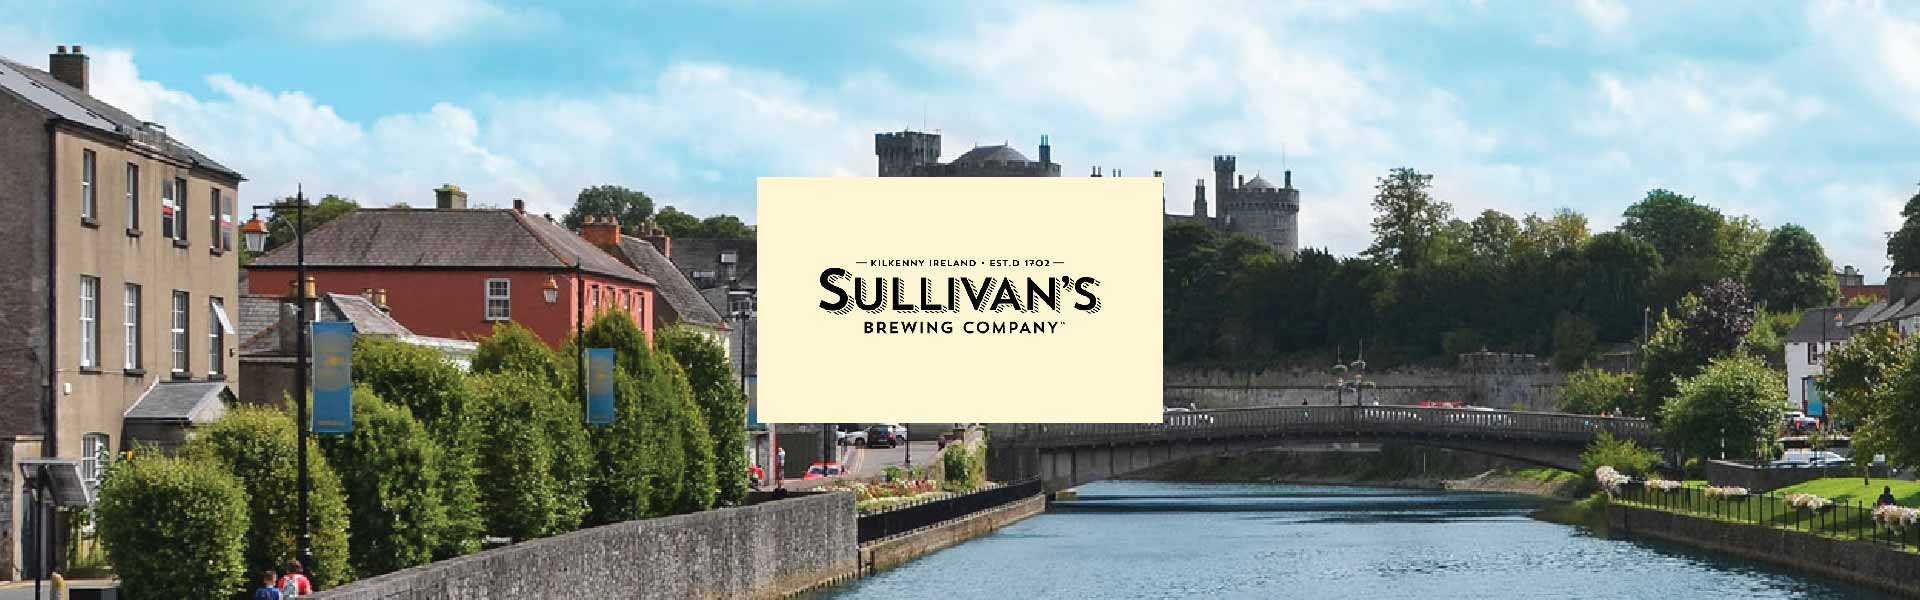 Sullivan's Brewing Co.